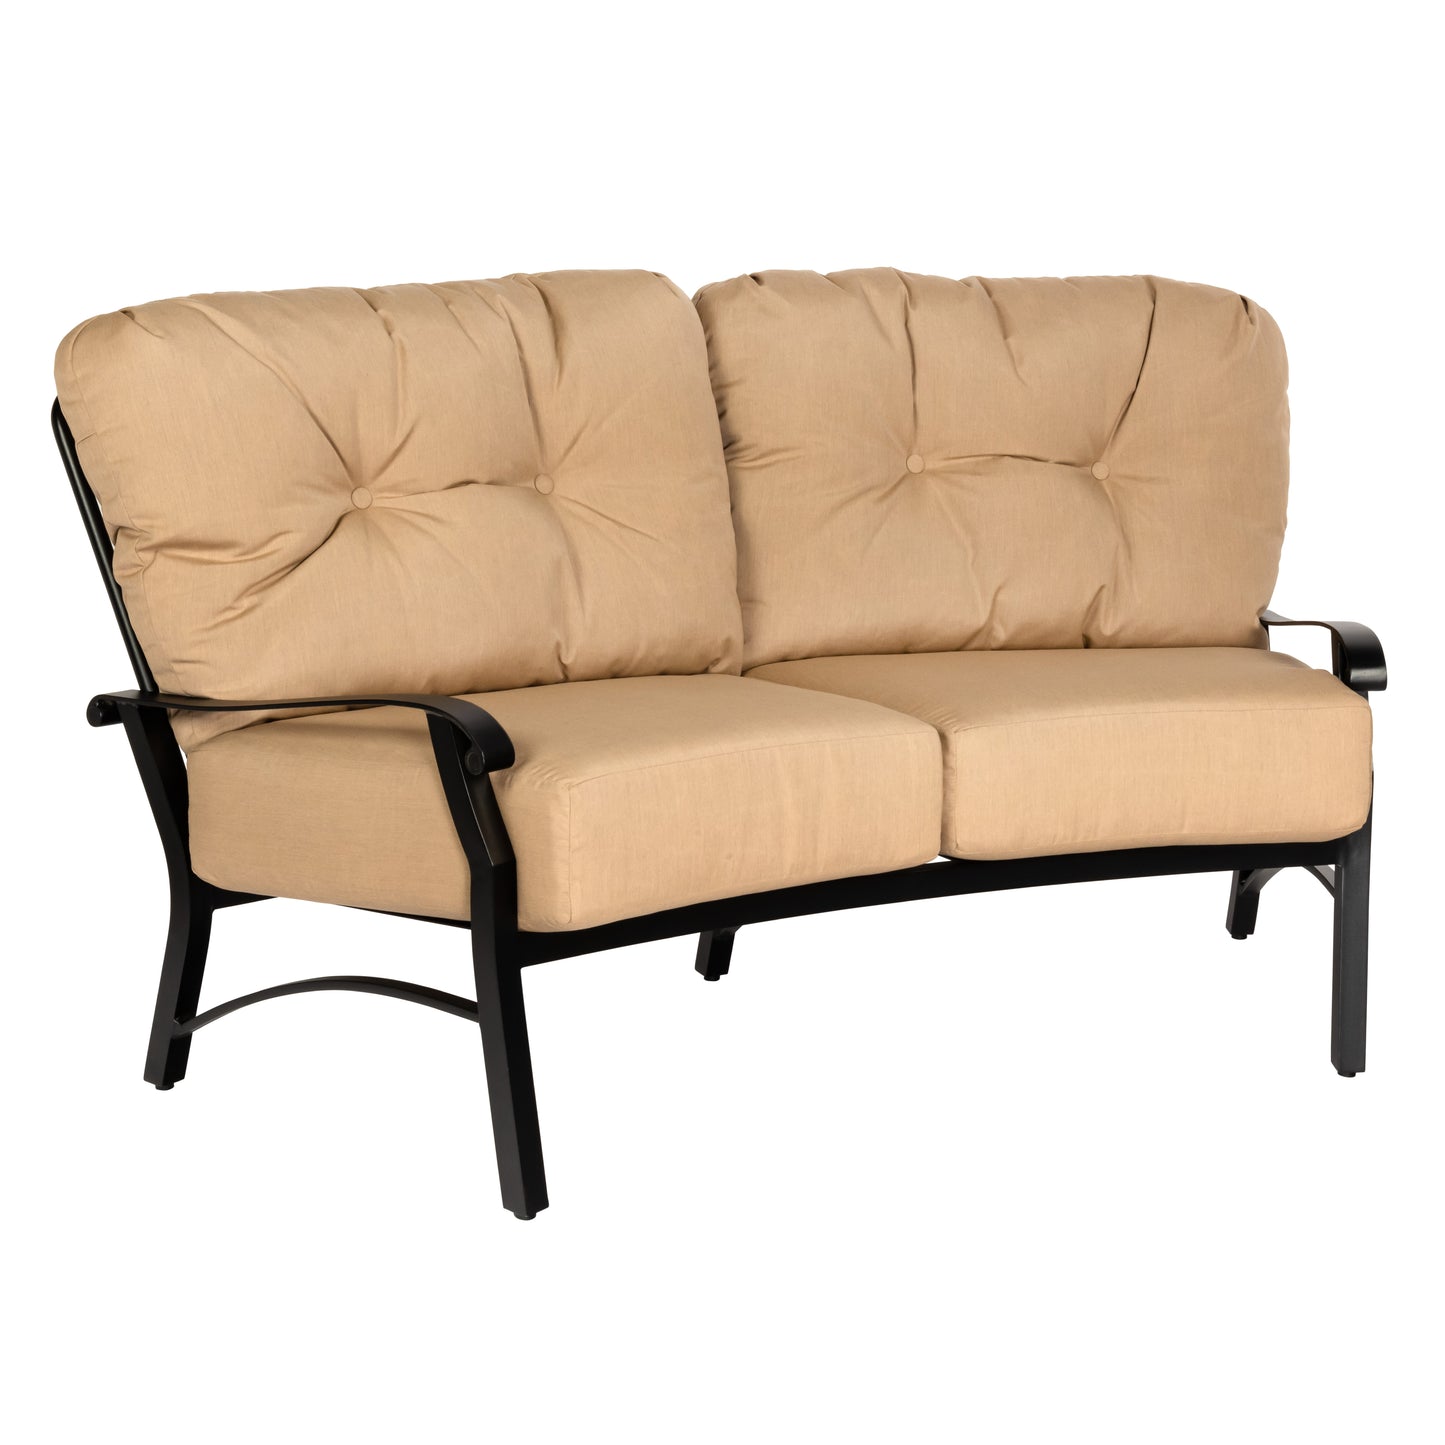 Woodard Cortland Cushion Crescent Love Seat 4Z0463 - Textured Black / Michelangelo Toast